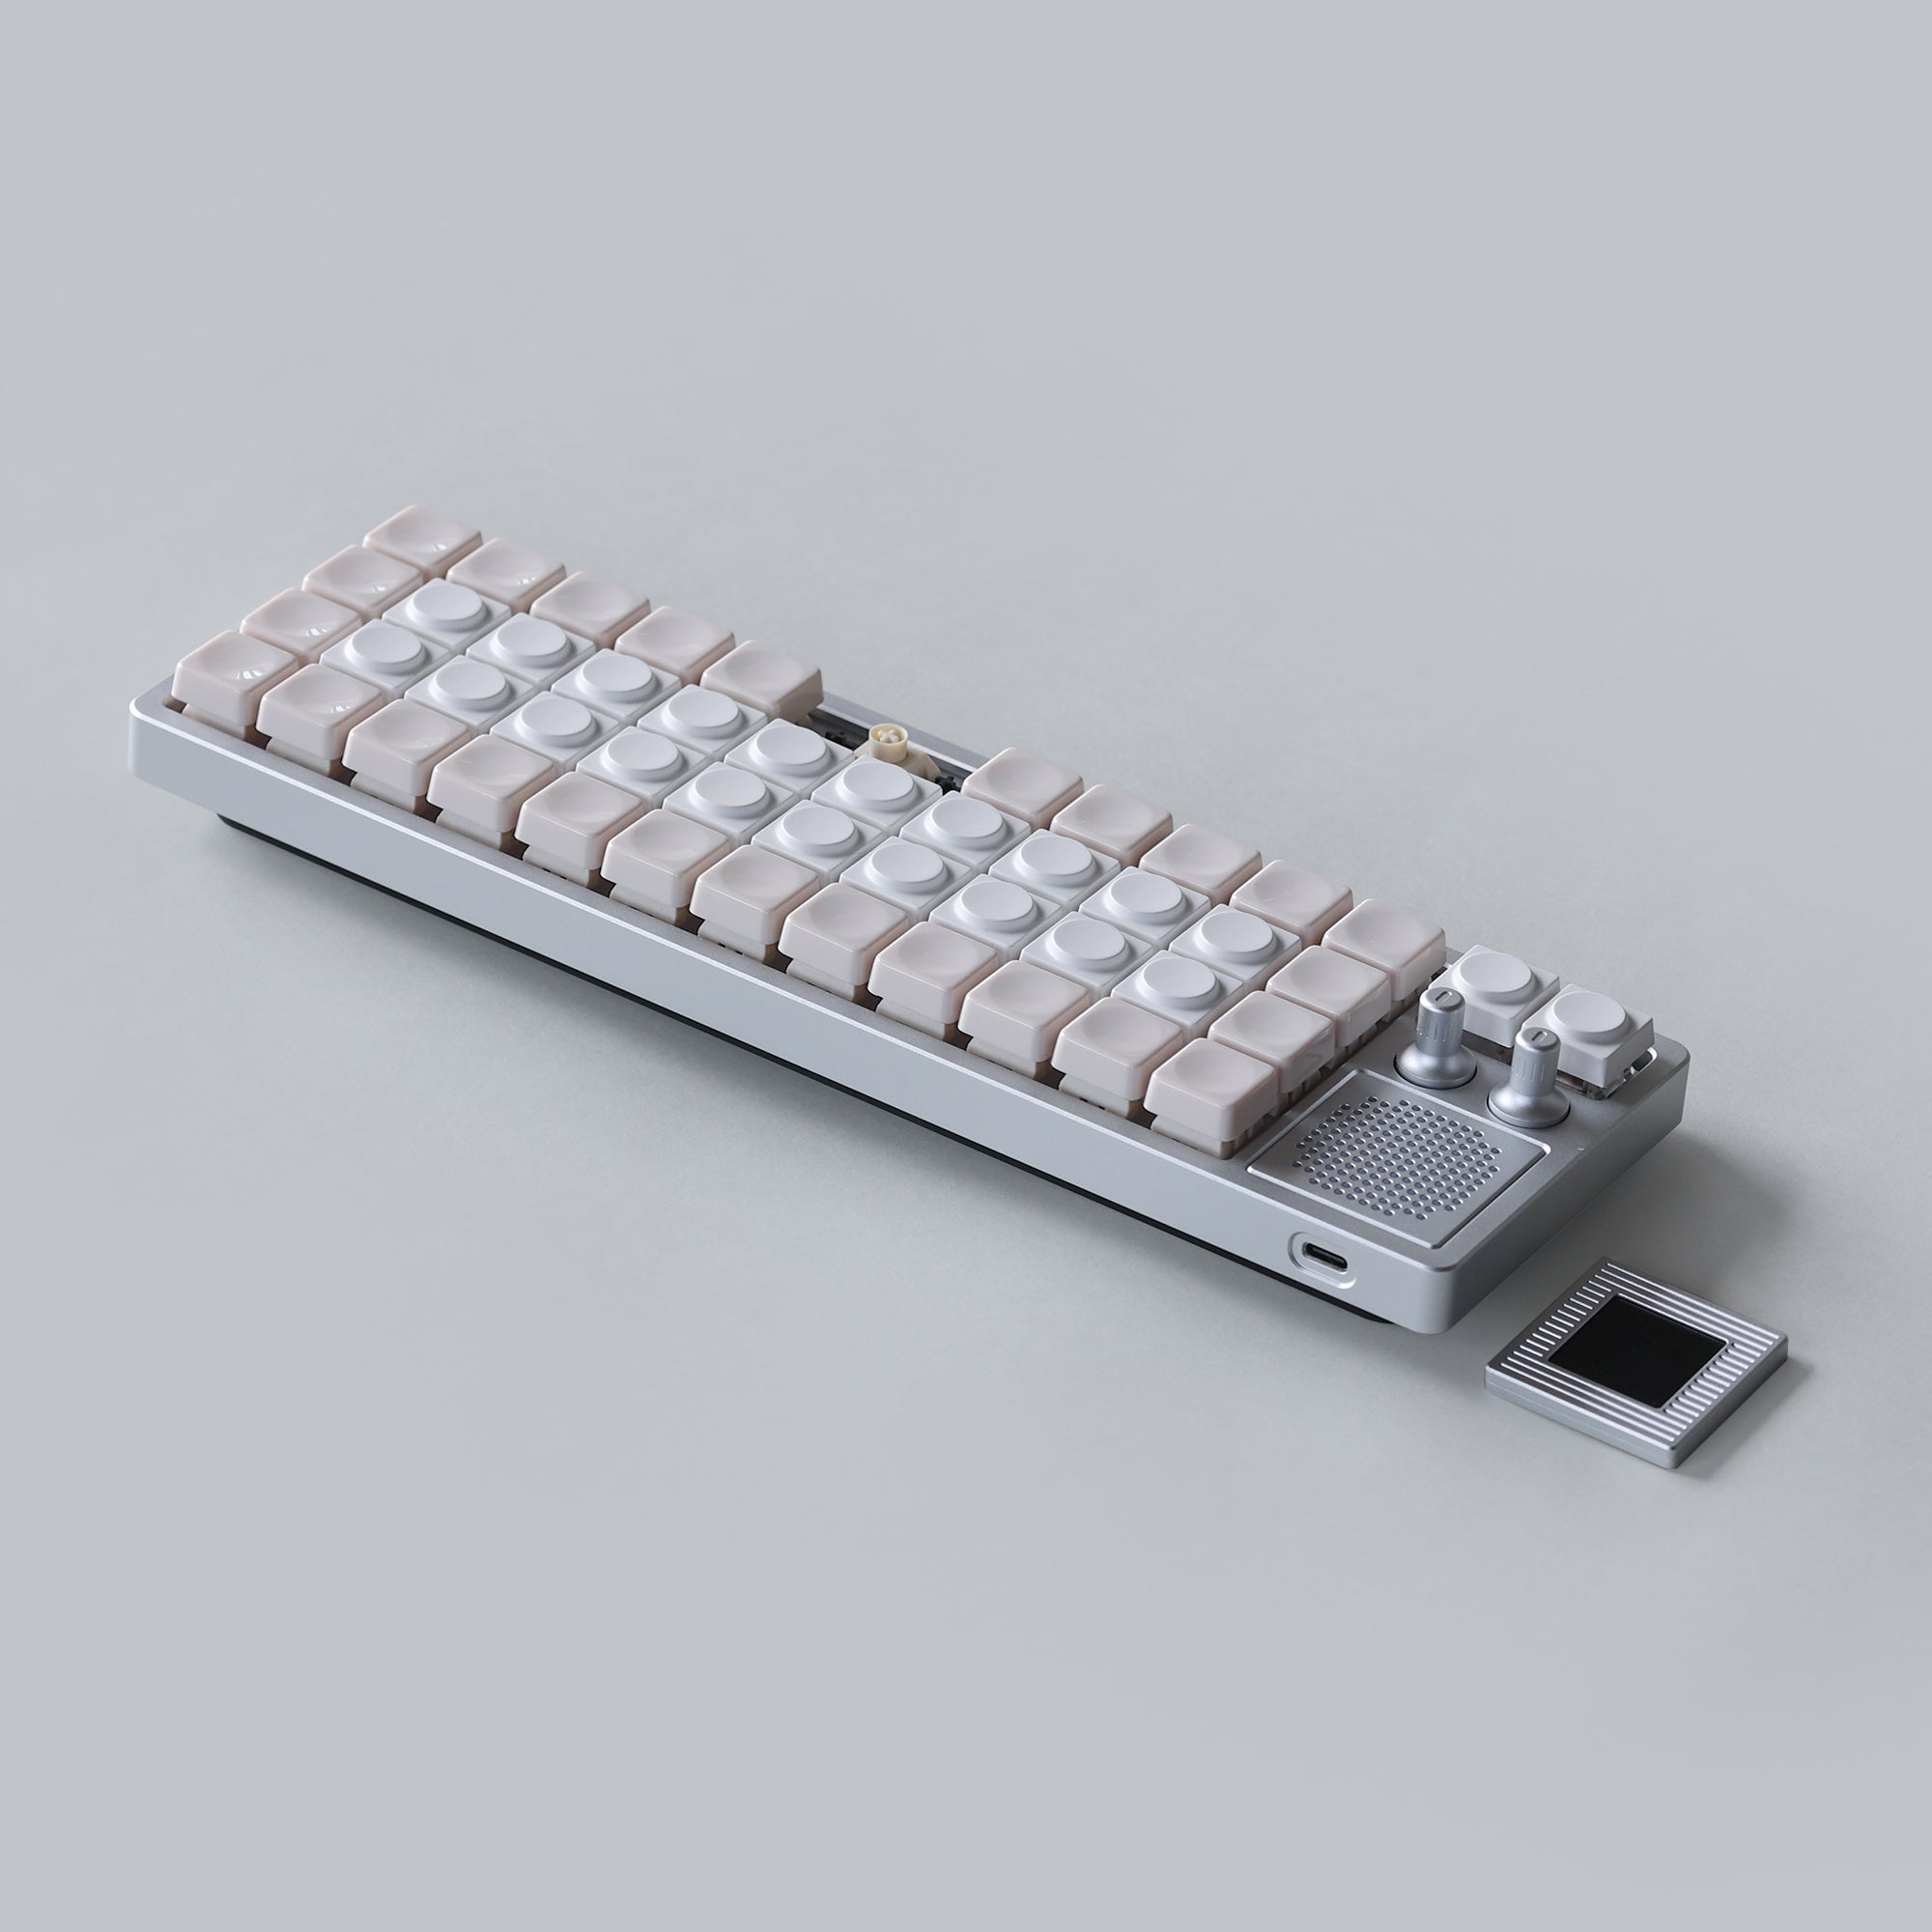 KBDfans Custom Keyboard KBDfans SOLAR keyboard kit